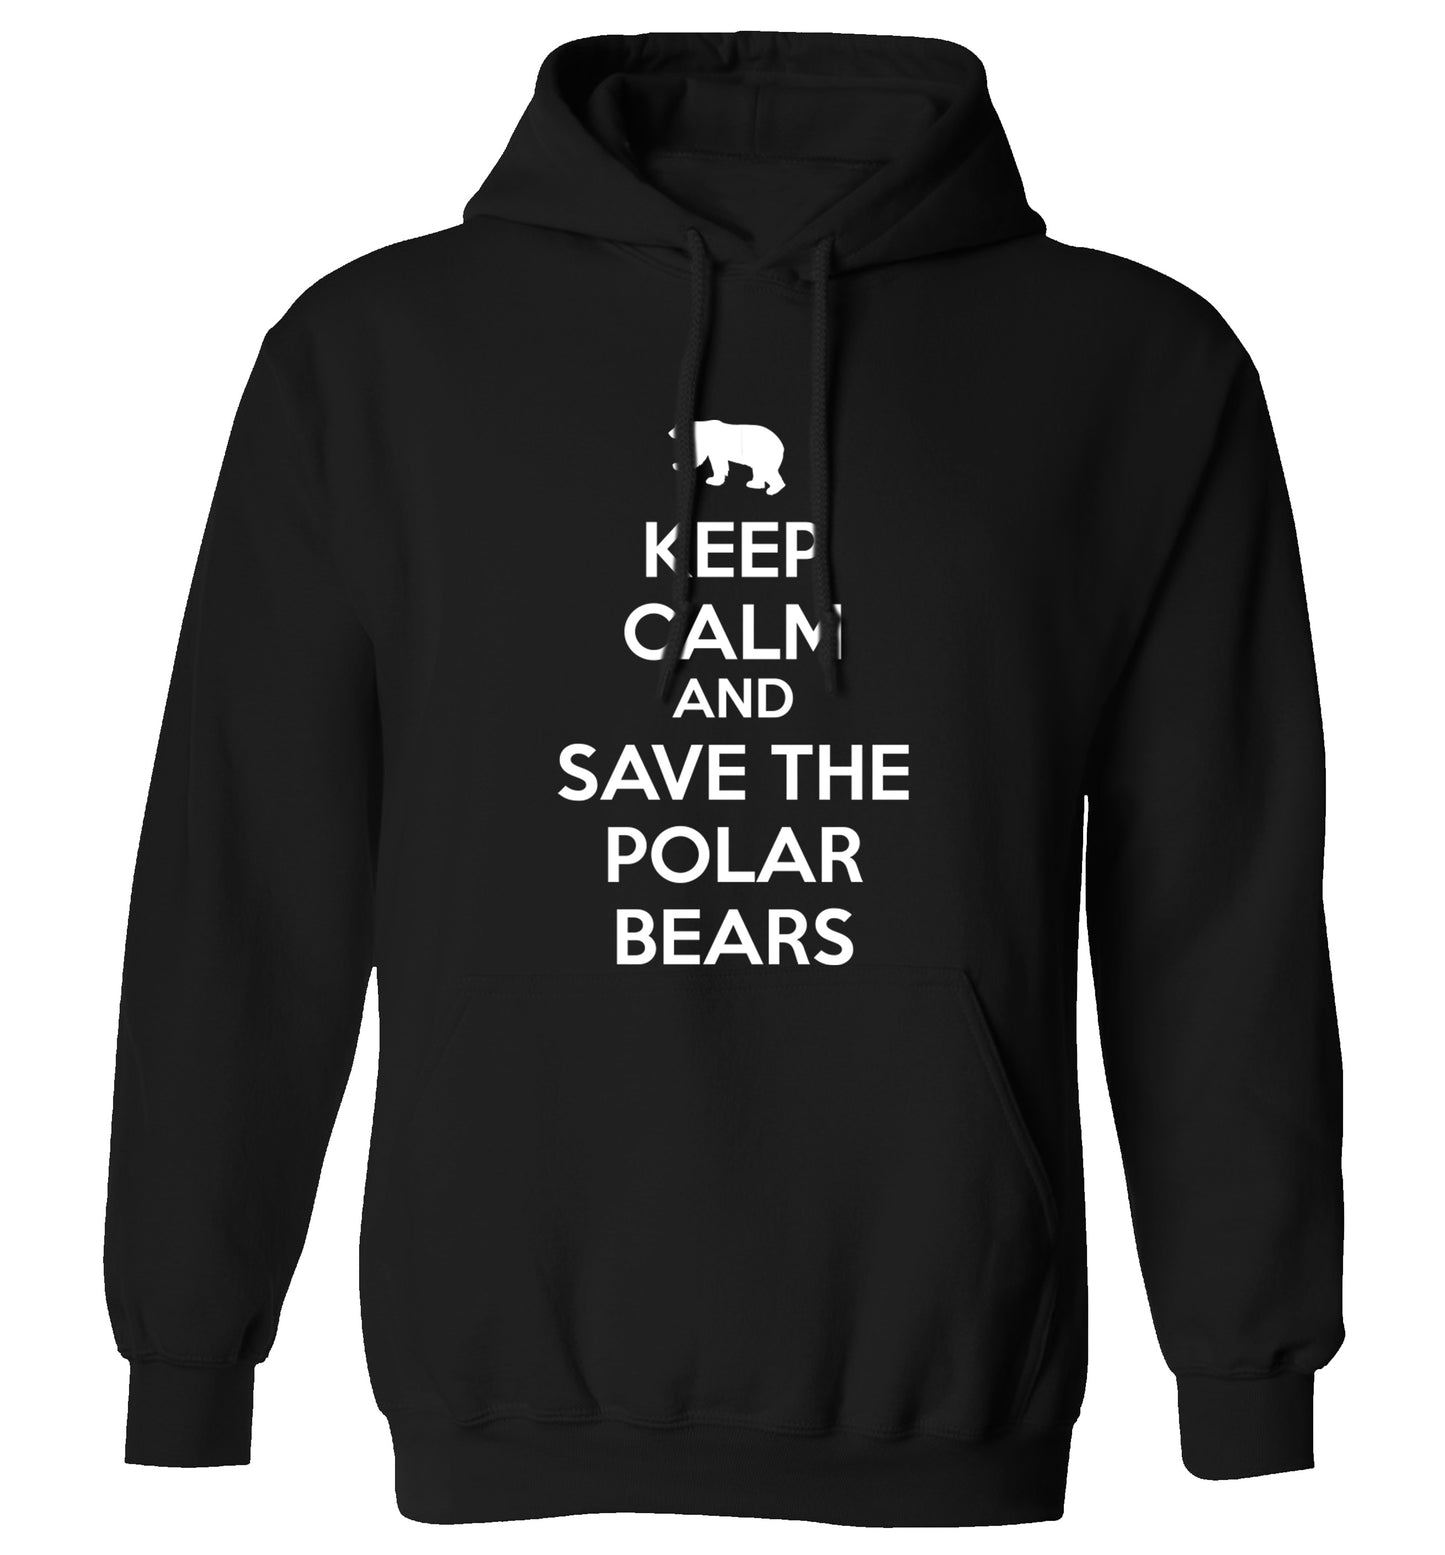 Keep calm and save the polar bears adults unisex black hoodie 2XL